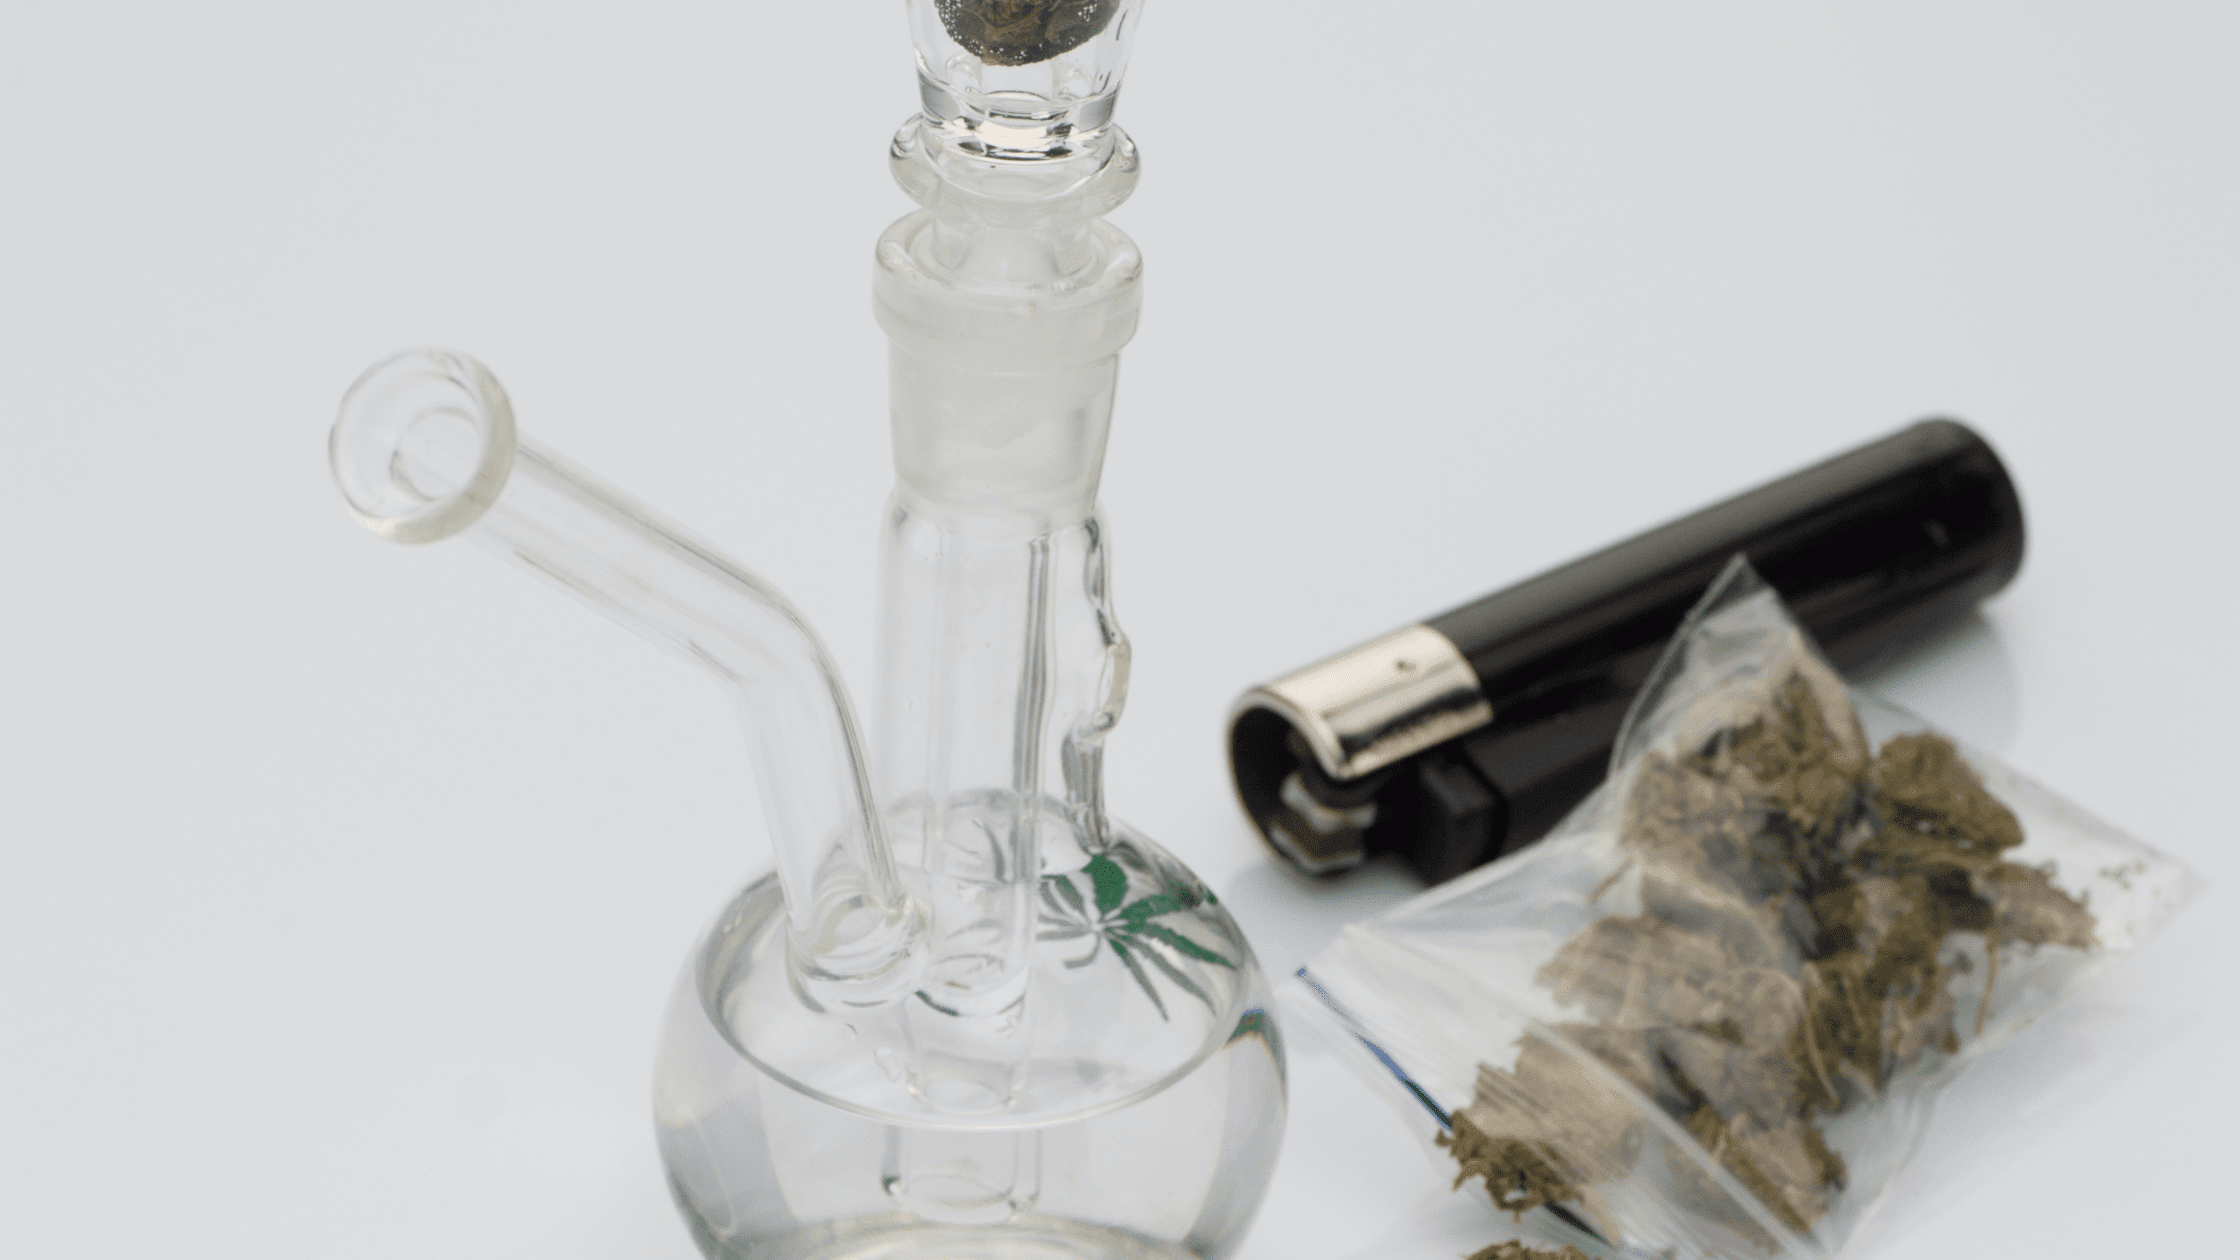 Understanding Your Cannabis Smoking Tools